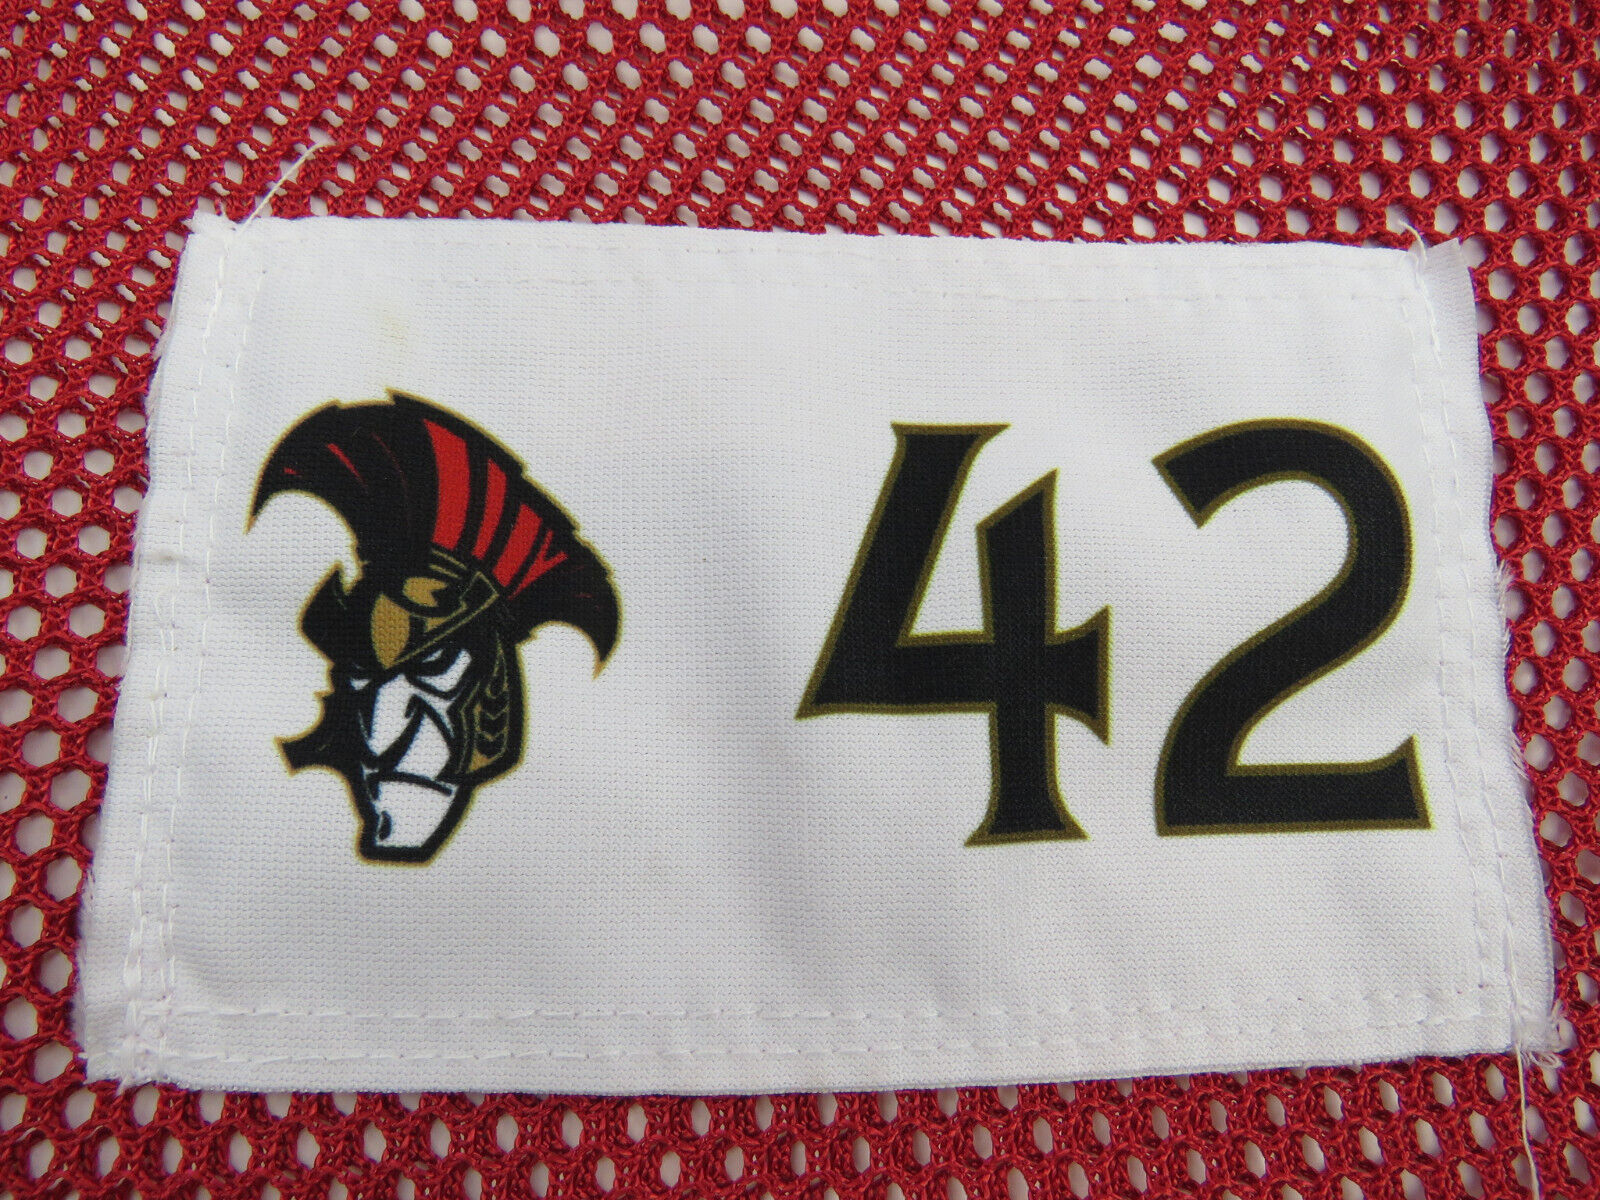 Binghamton Senators AHL Pro Stock Hockey Player Laundry Bag Red #42 Ottawa